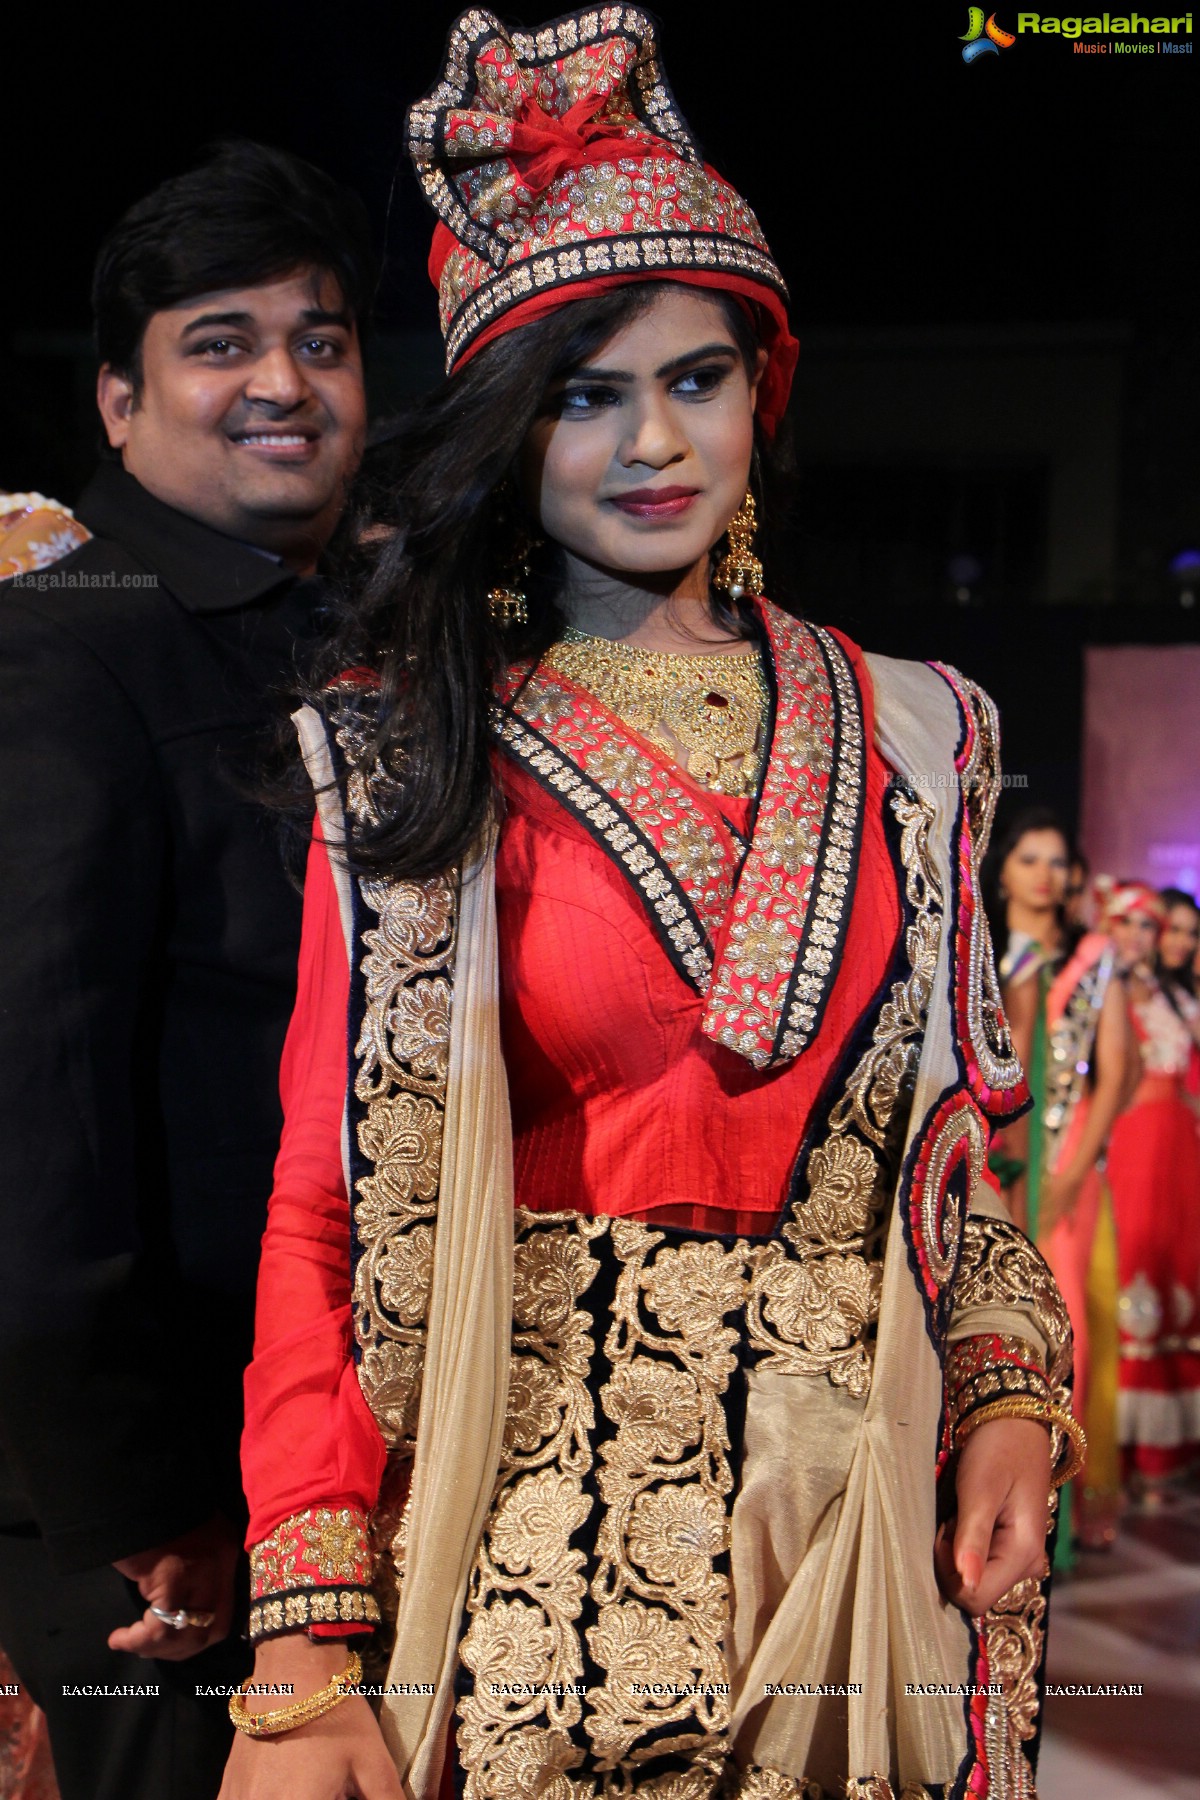 Kalamandir Hyderabad Wedding Fashion Tour 2014 (Day 3)